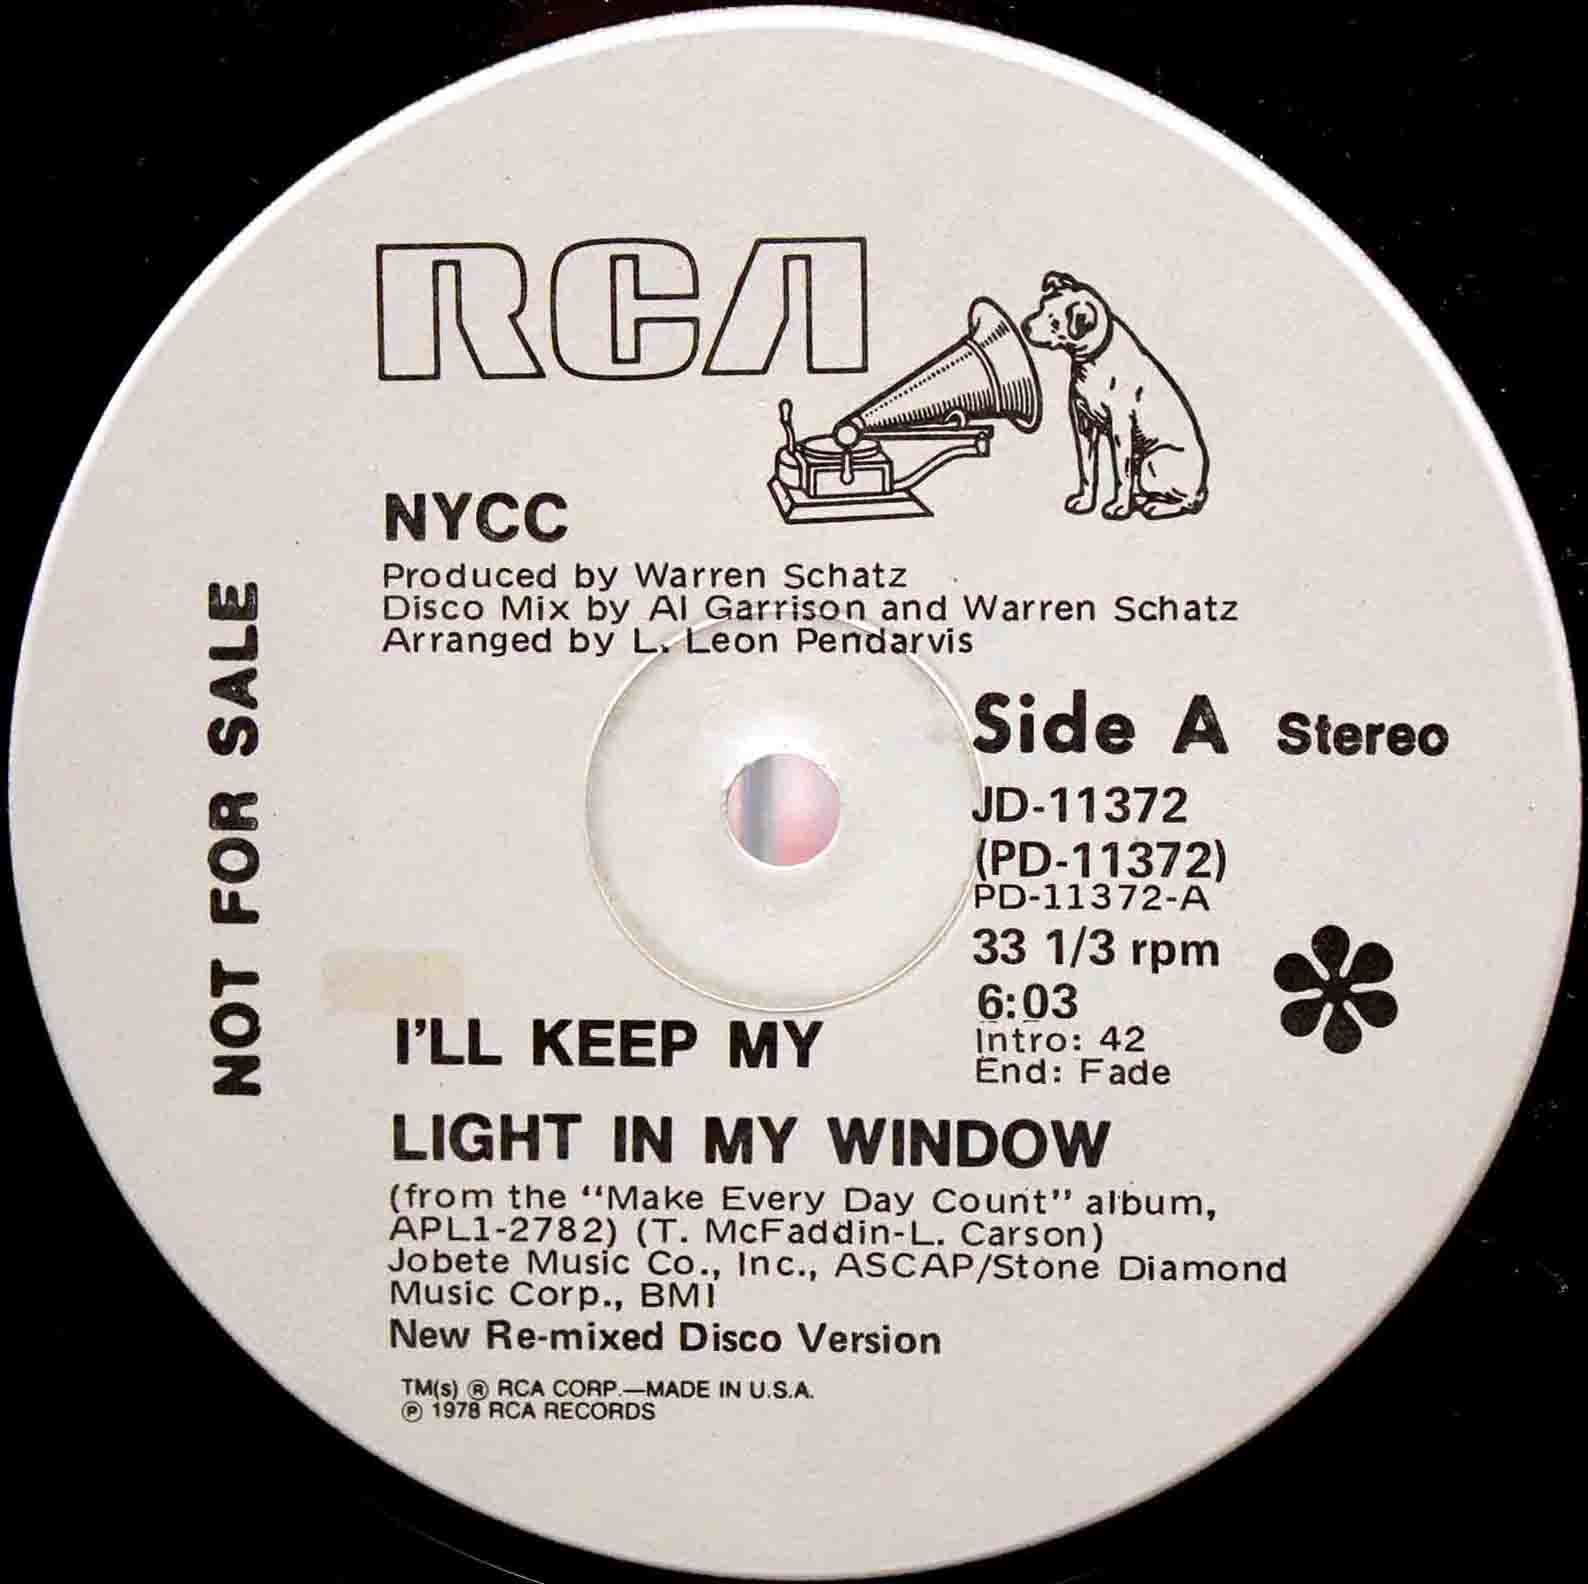 NYCC ‎– Ill Keep My Light In My Window 03